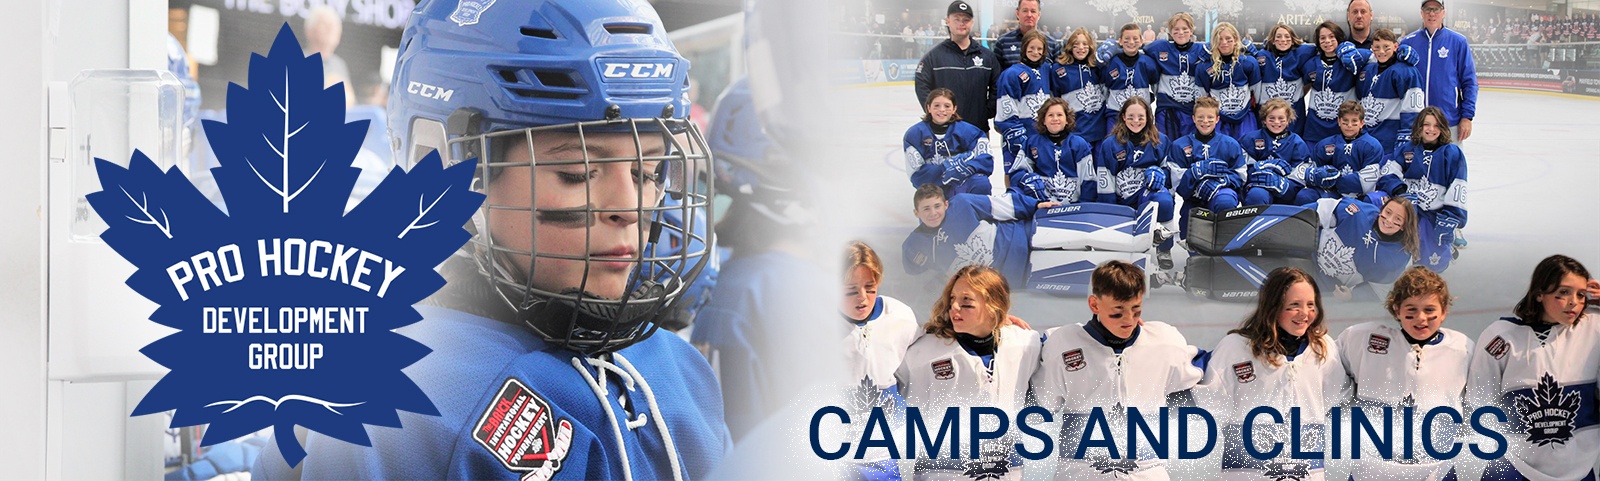 Hockey Camps, Clinics and Training Programs by Pro Hockey Development Group